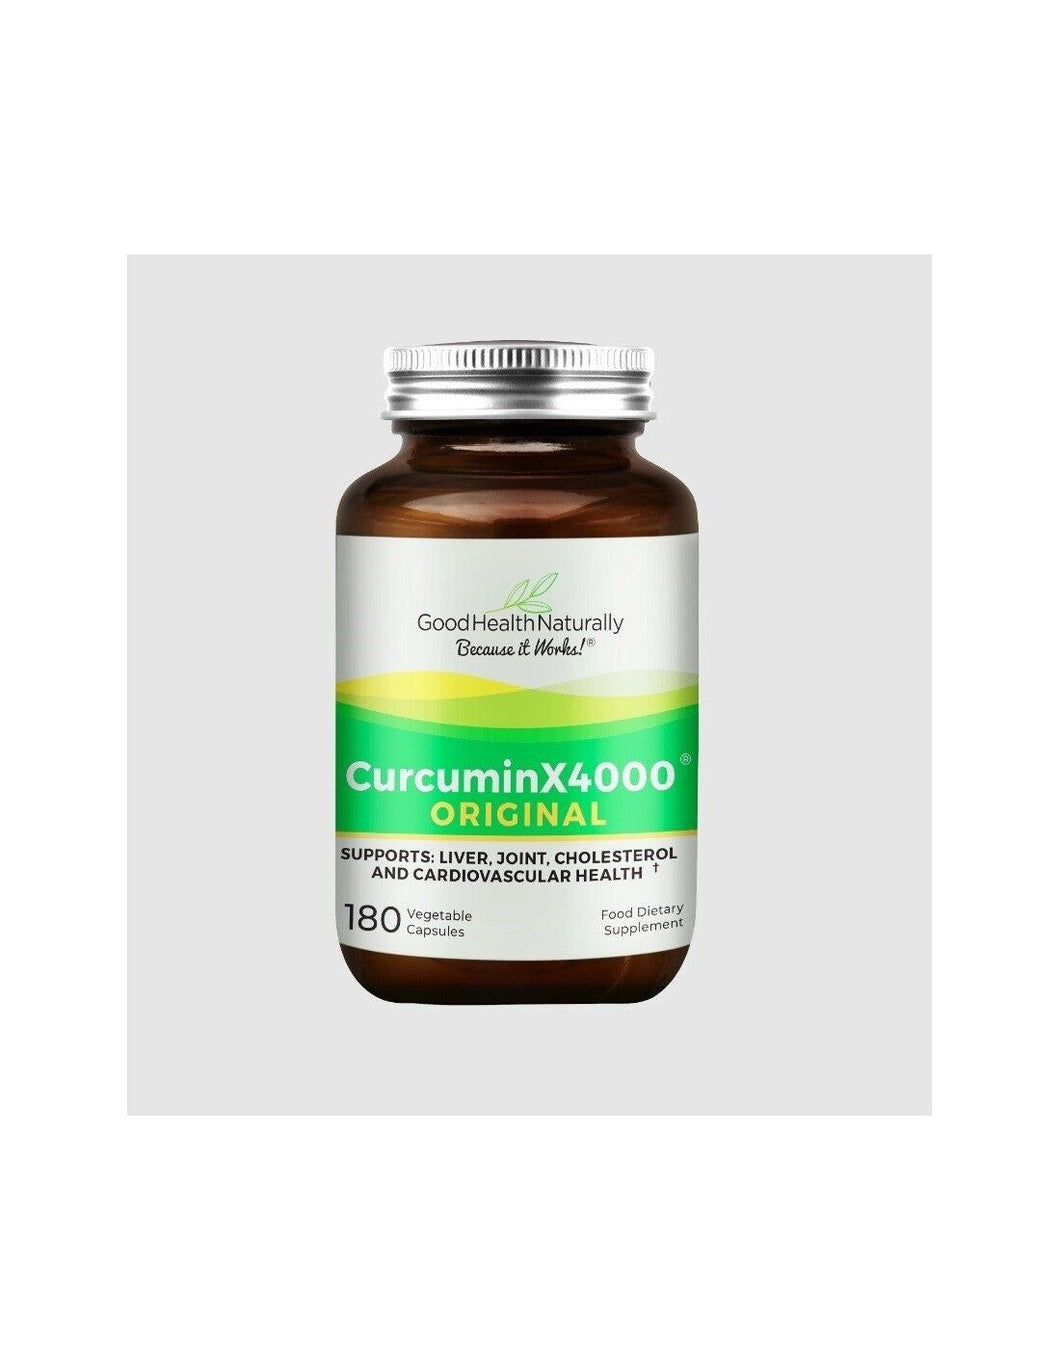 https://organicbargains.co.uk/products/good-health-naturally-curcuminx4000-original-180-capsules